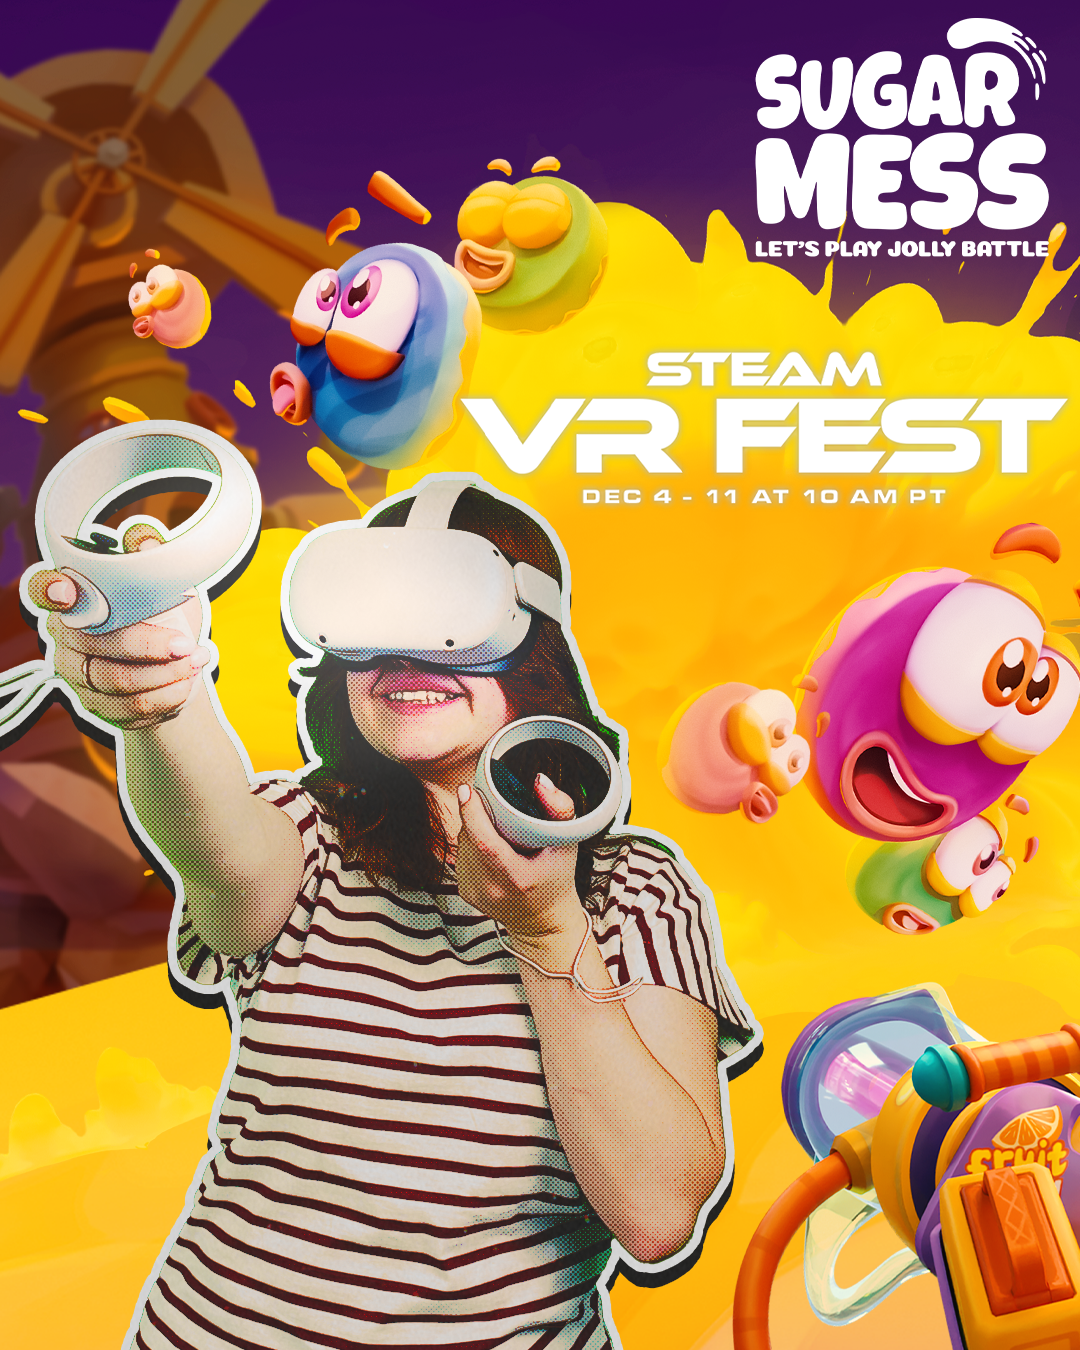 Sugar Mess VR Game Streams on STEAM VR Fest